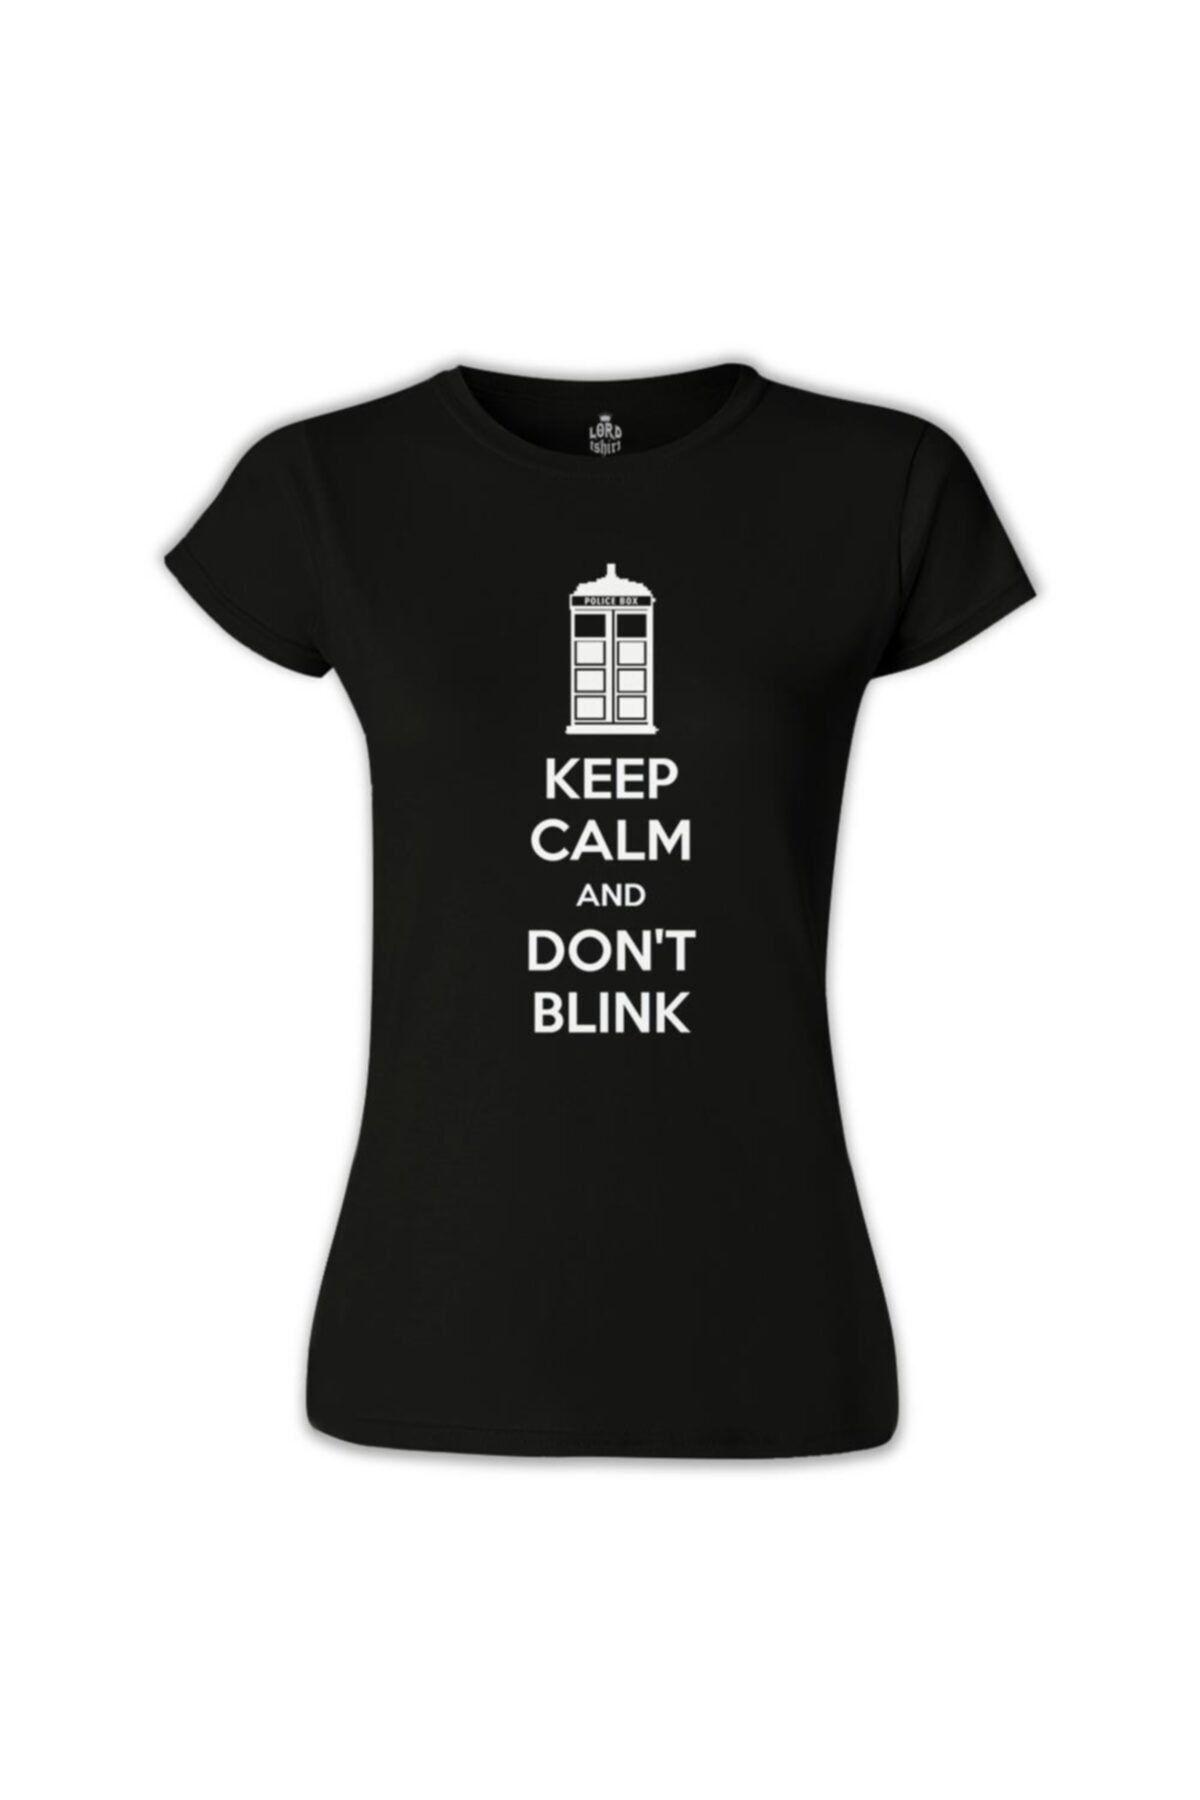 Lord T-Shirt Kadın Siyah Doctor Who - Don't Blink Baskılı Tshirt